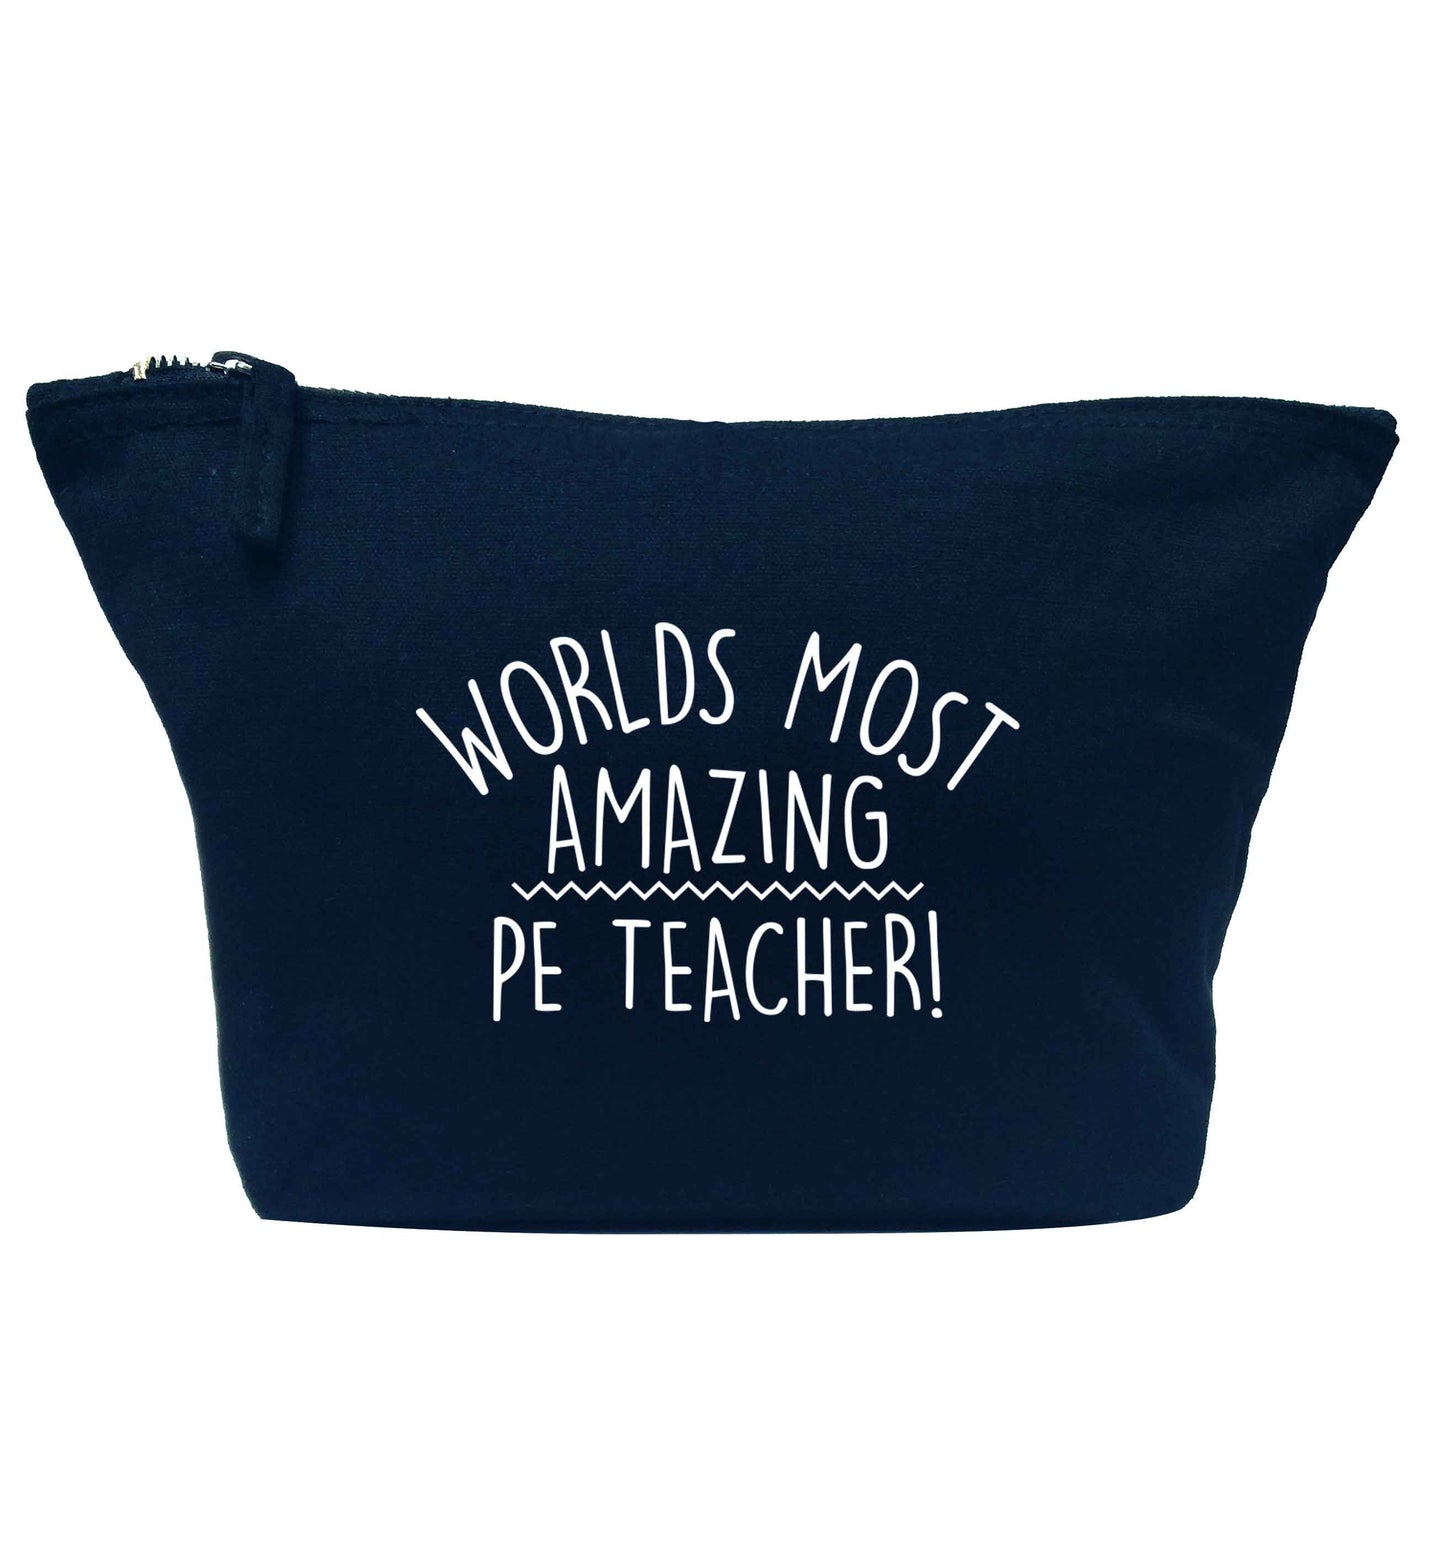 Worlds most amazing PE teacher navy makeup bag